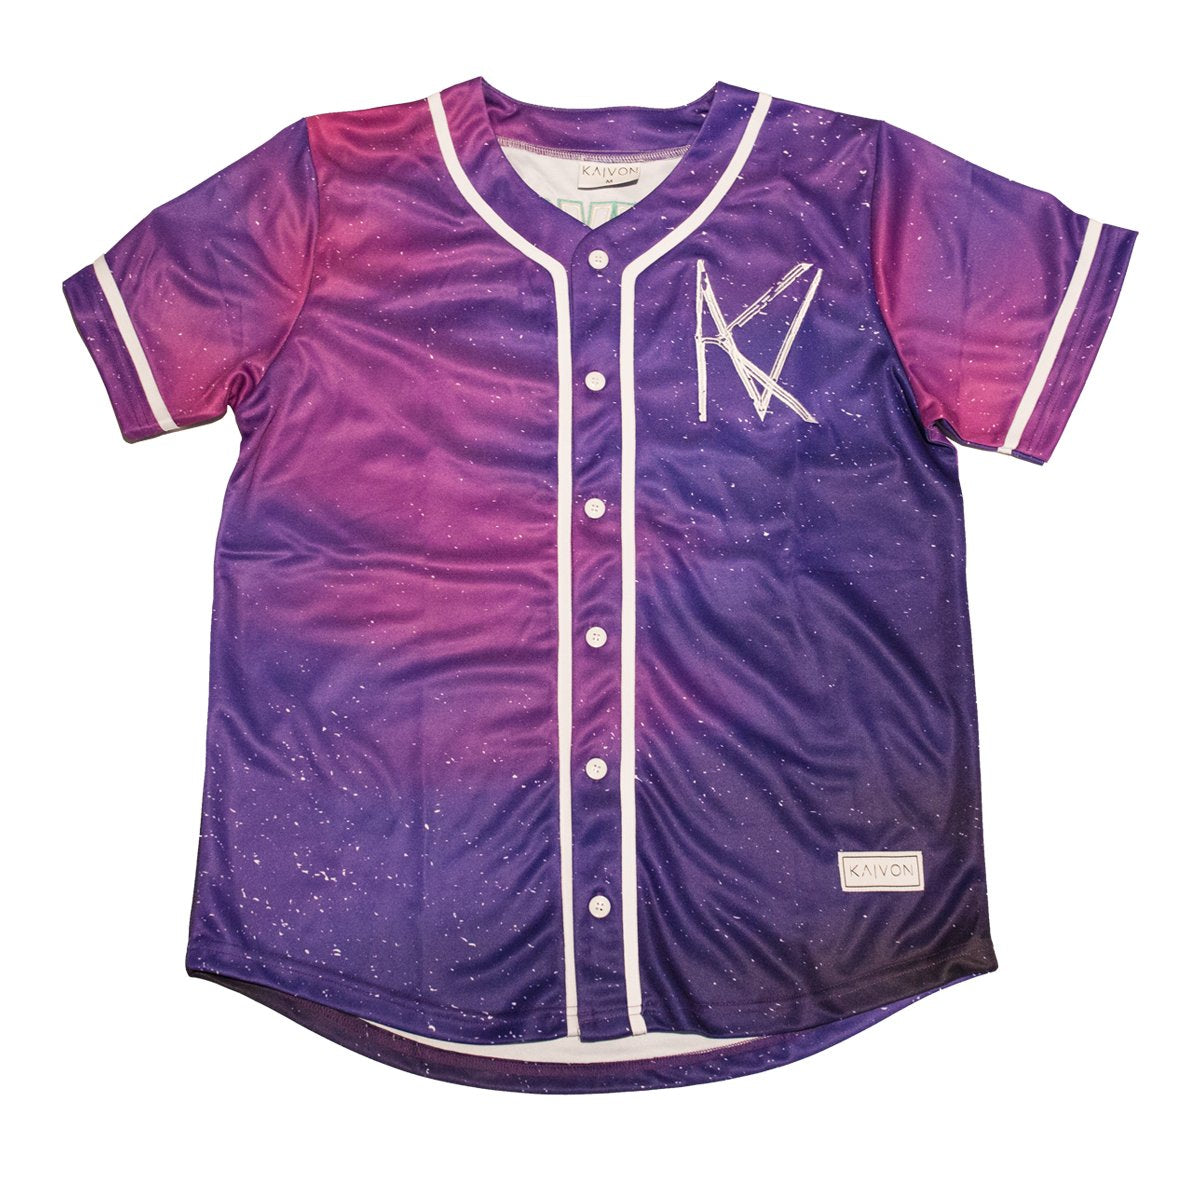 Kaivon Baseball Jersey - Baseball Jersey -  Kaivon-  Electric Family Official Artist Merchandise